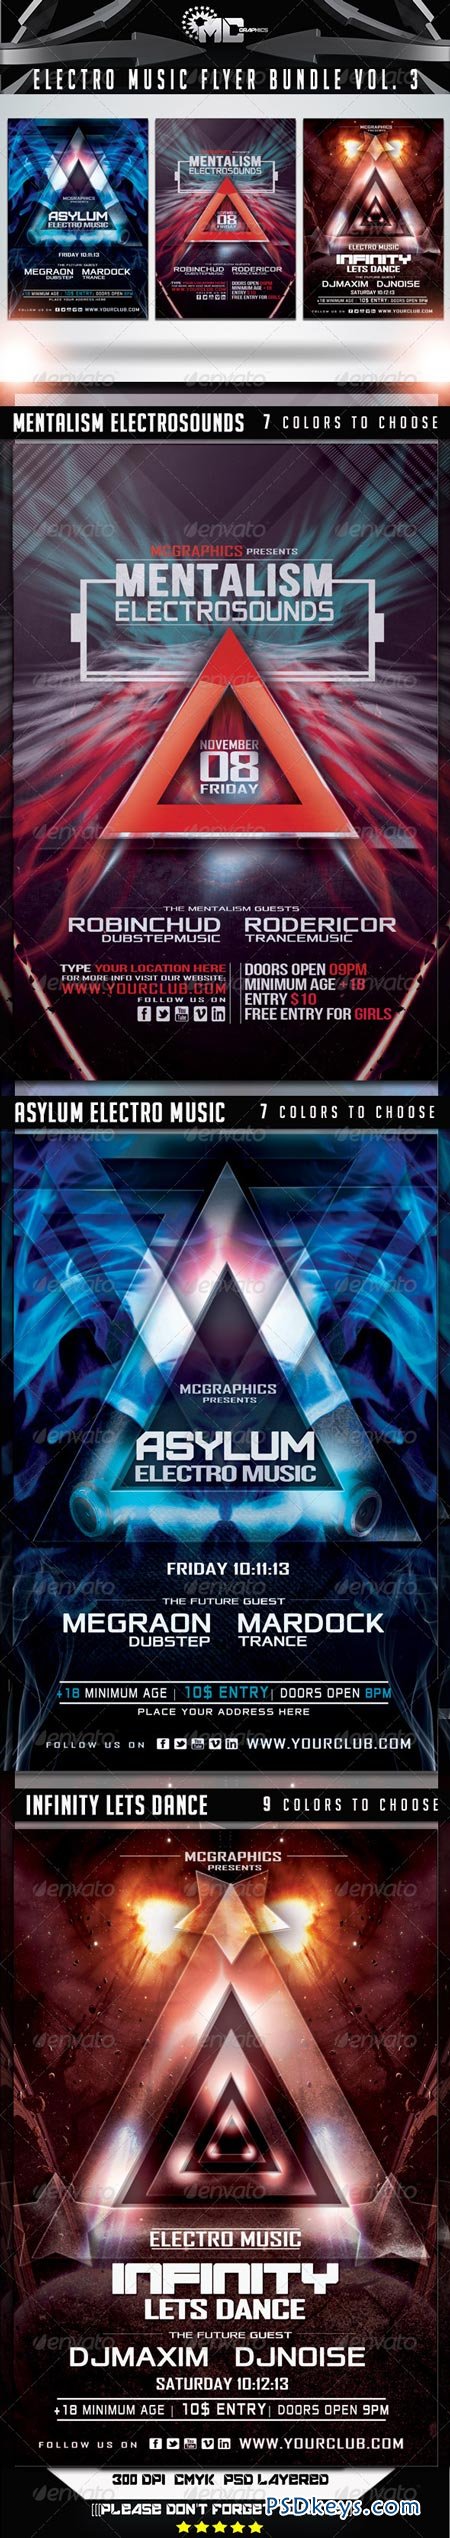 Electro Music Flyer Bundle Vol. 3 6899849